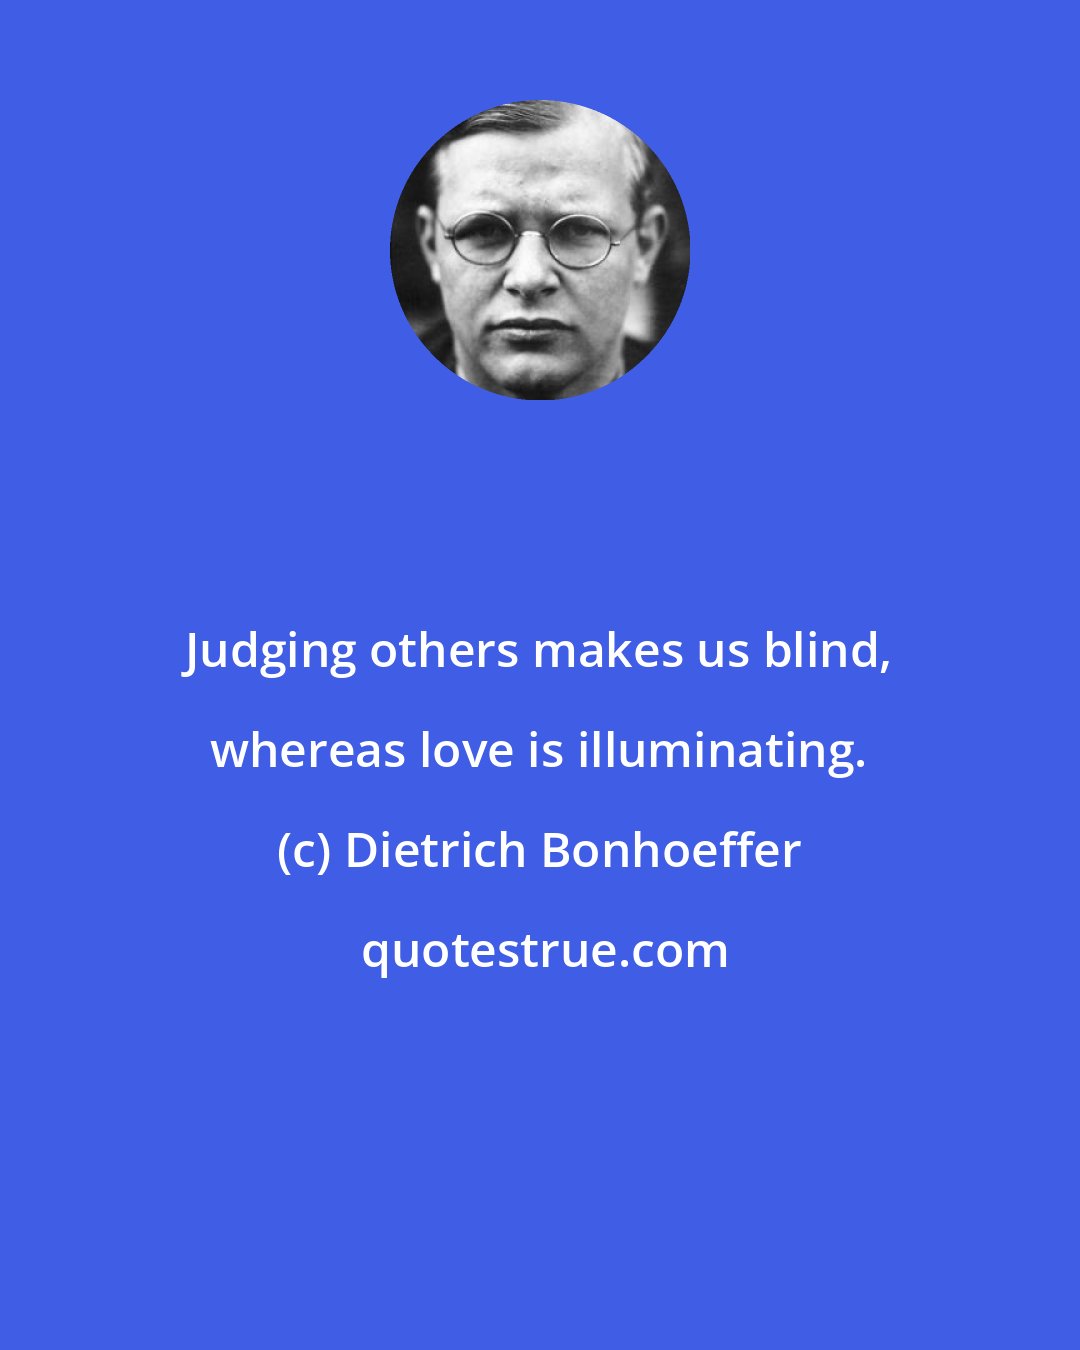 Dietrich Bonhoeffer: Judging others makes us blind, whereas love is illuminating.